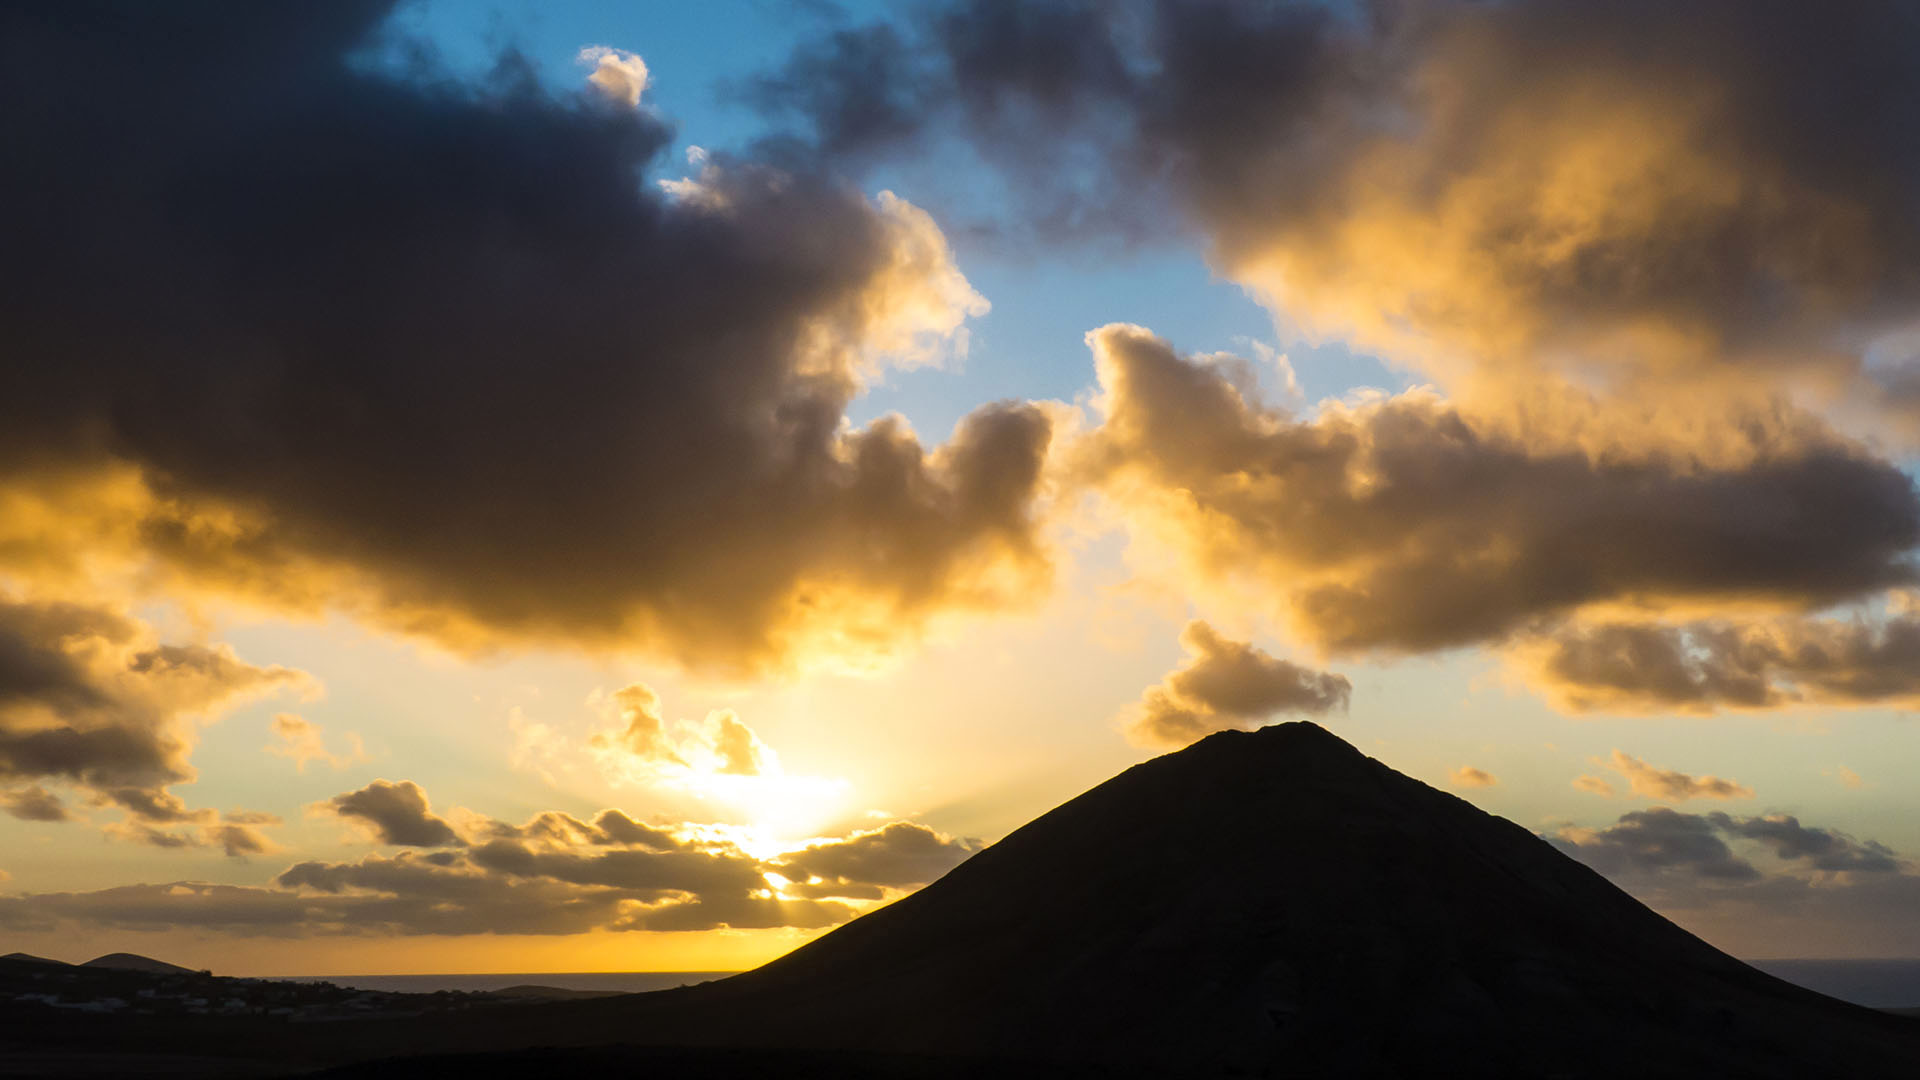 Sehenswürdigkeiten Fuerteventuras: Tindaya – Montaña Tindaya